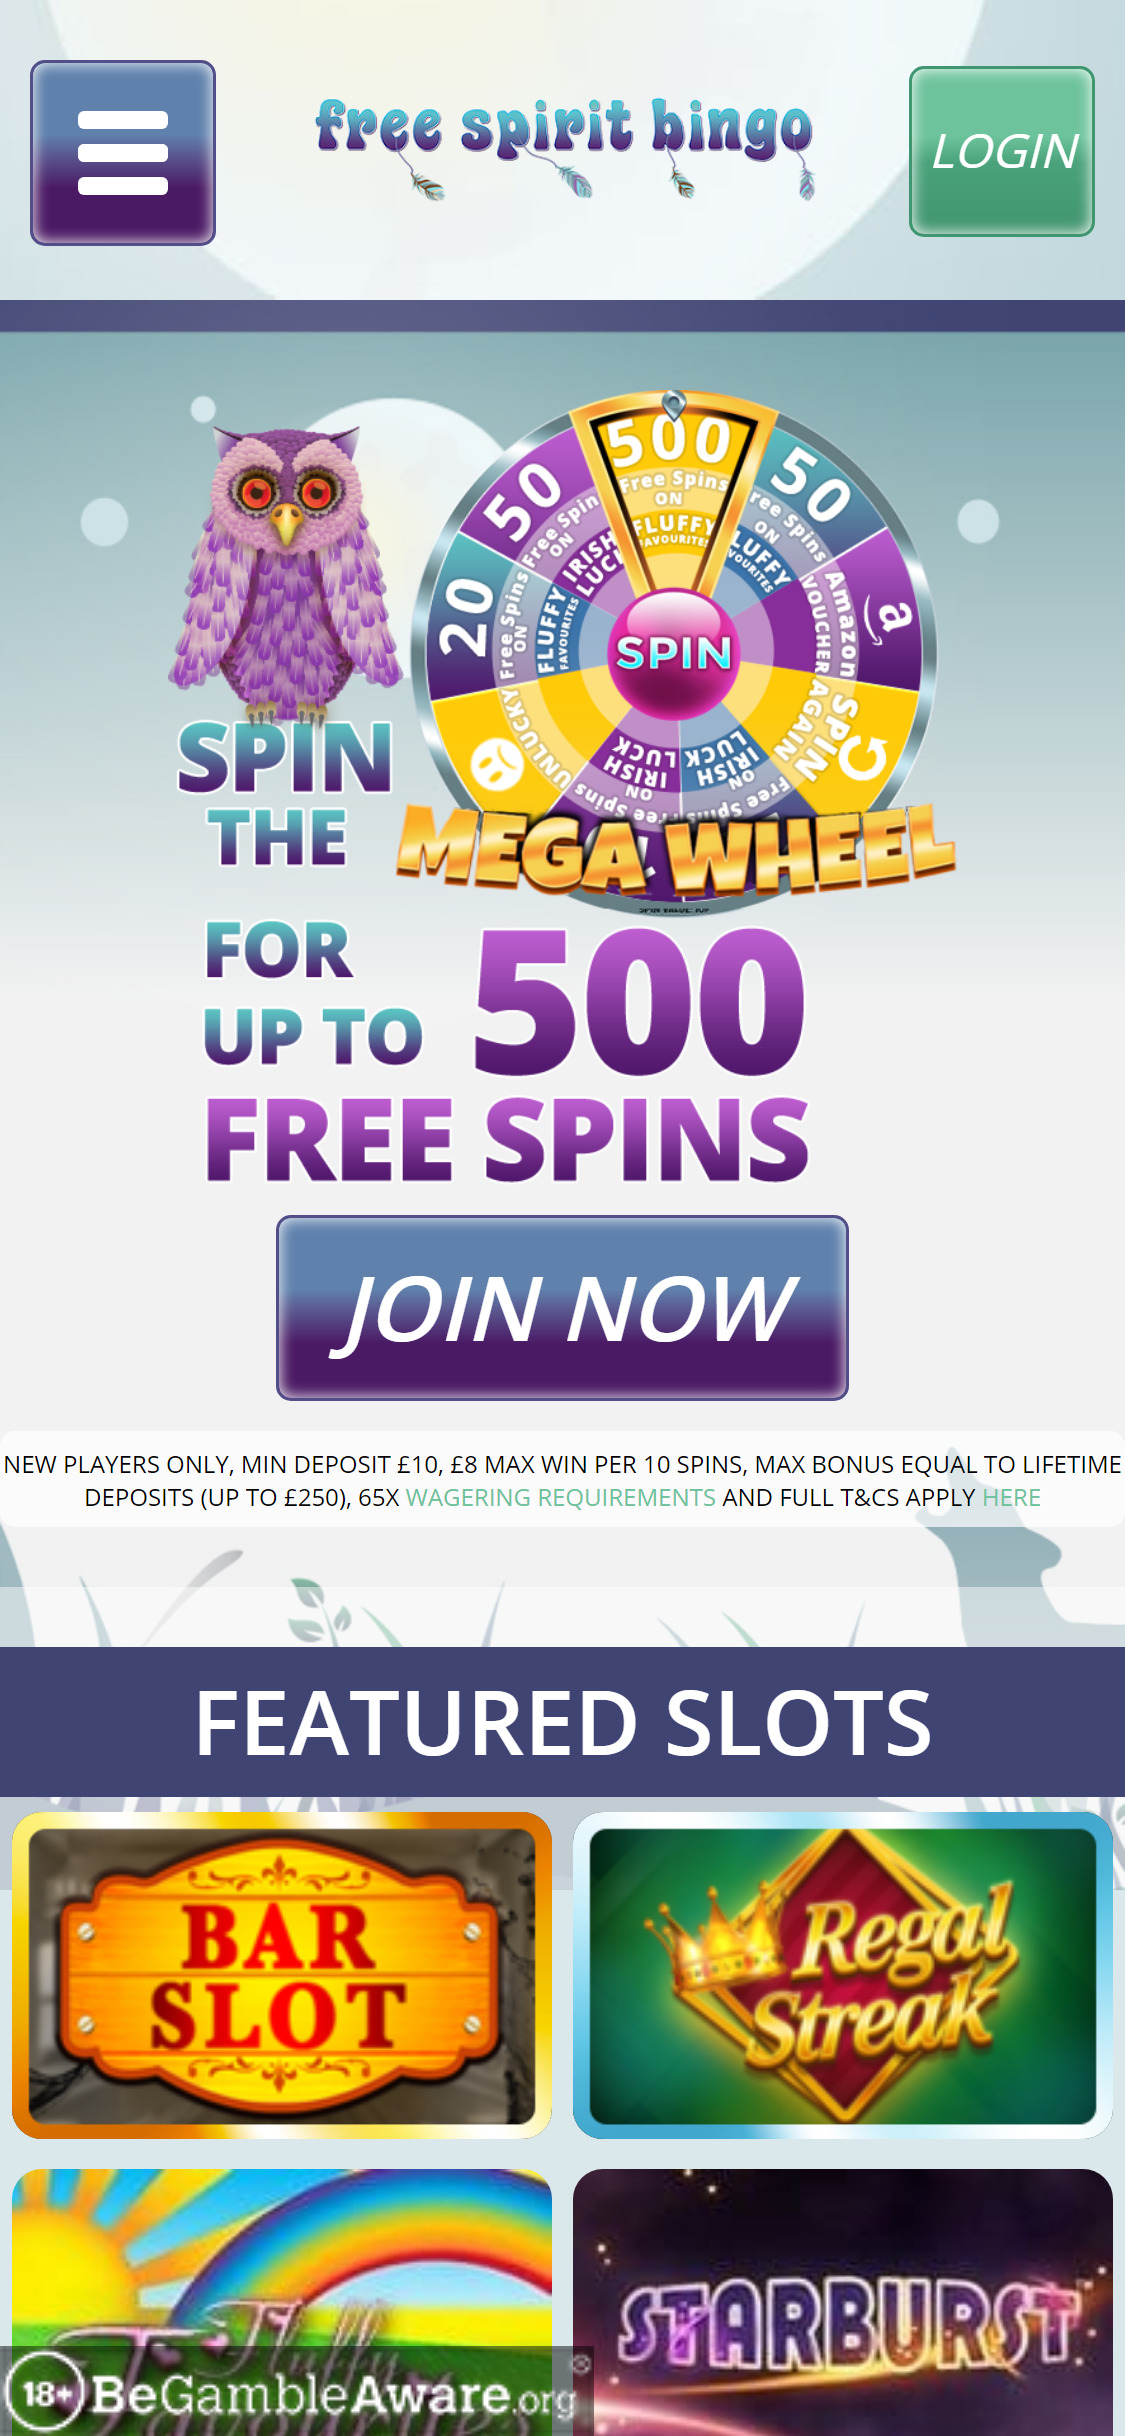 Free Spirit Bingo Casino Mobile Login Review